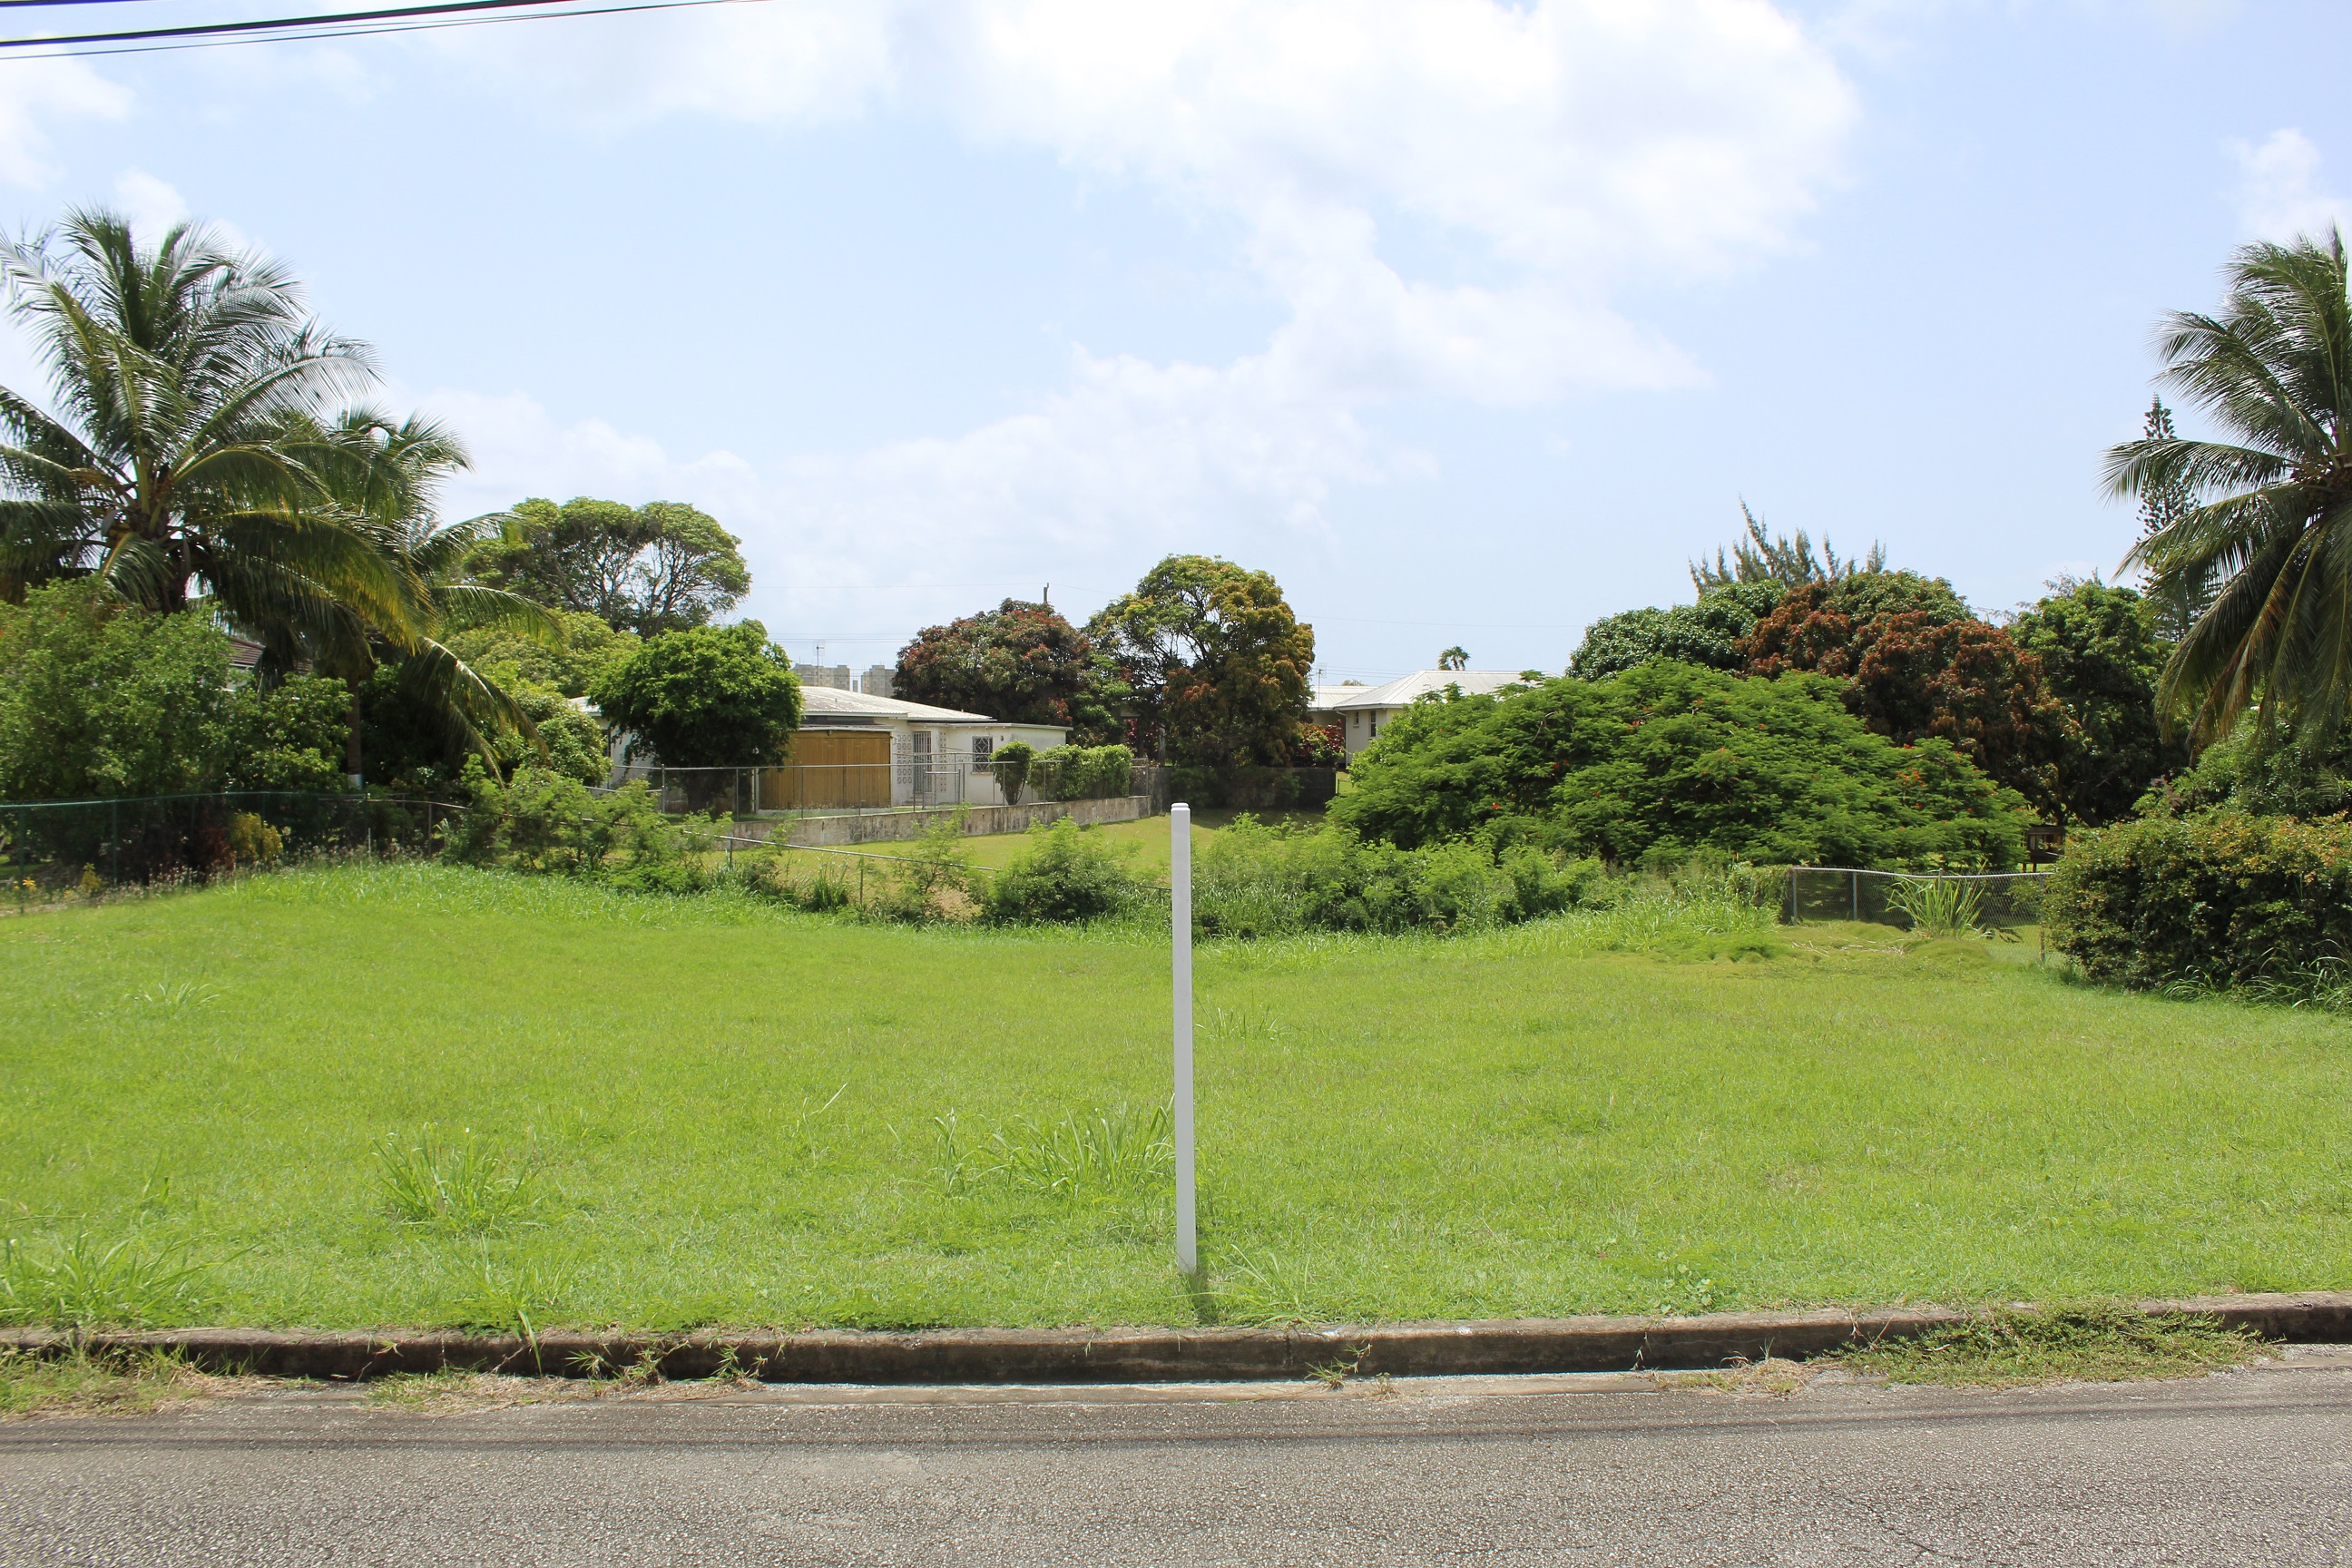   Prior Park Terrace, Lot 102, St. James Barbados.